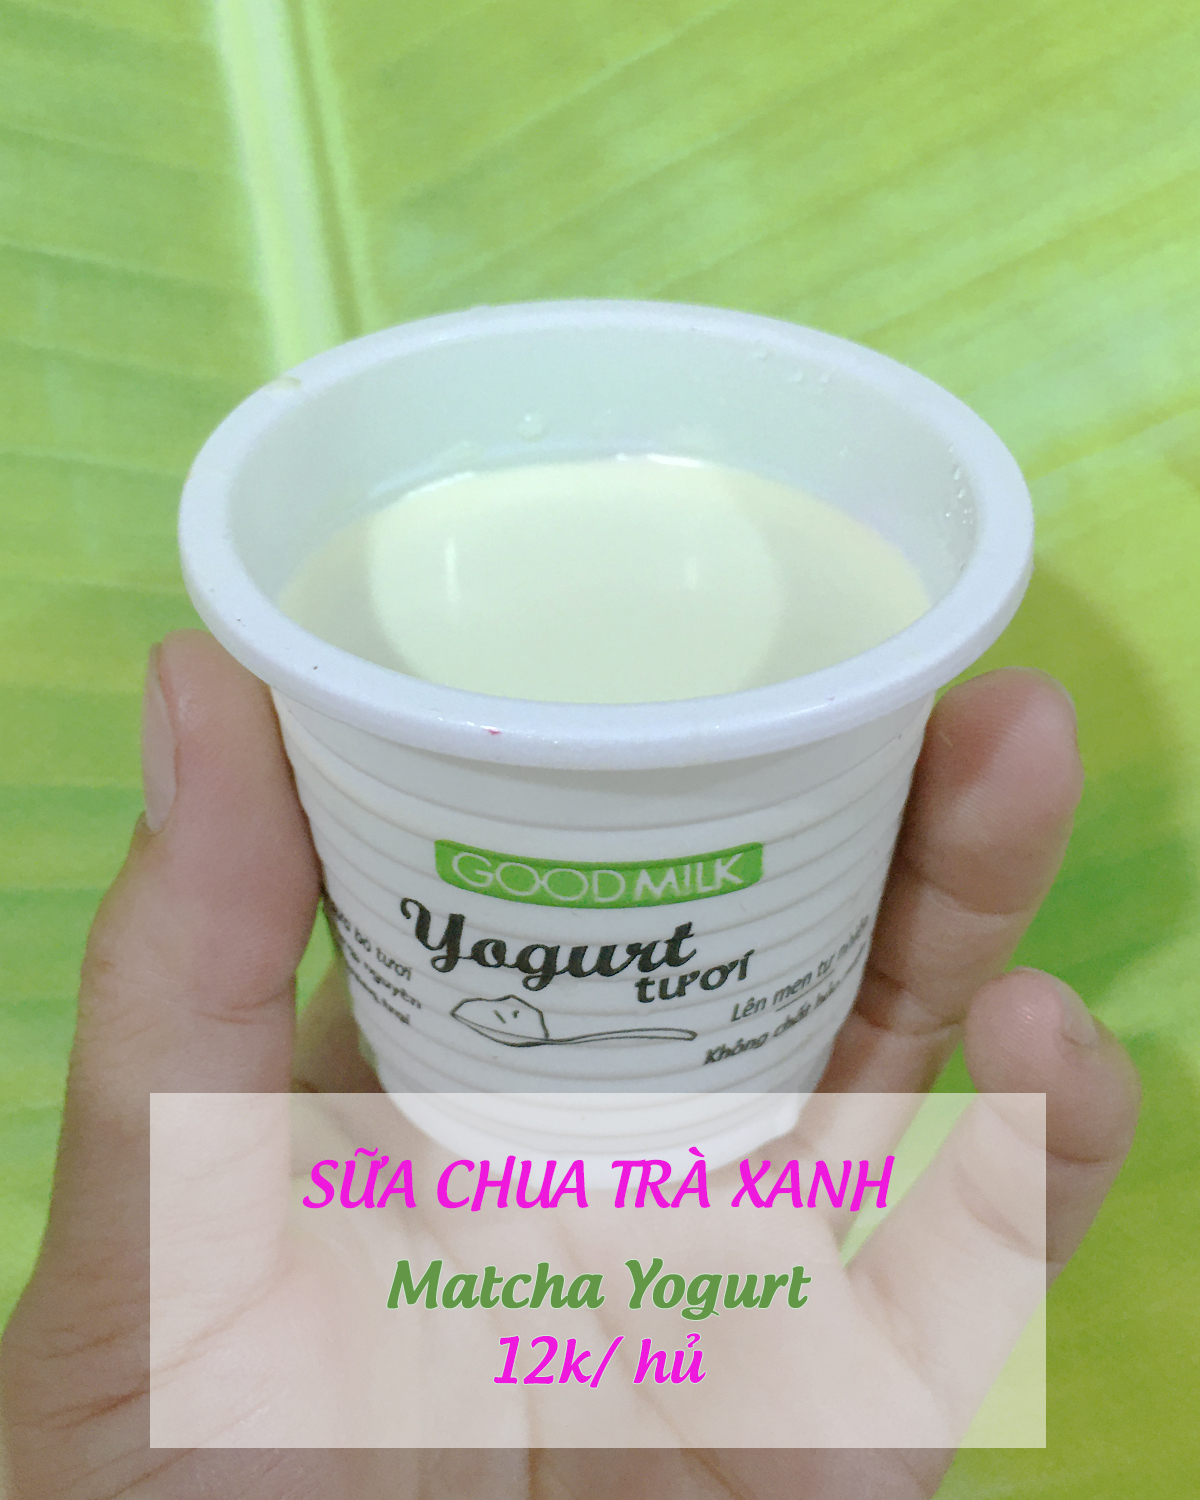 Matcha yogurt